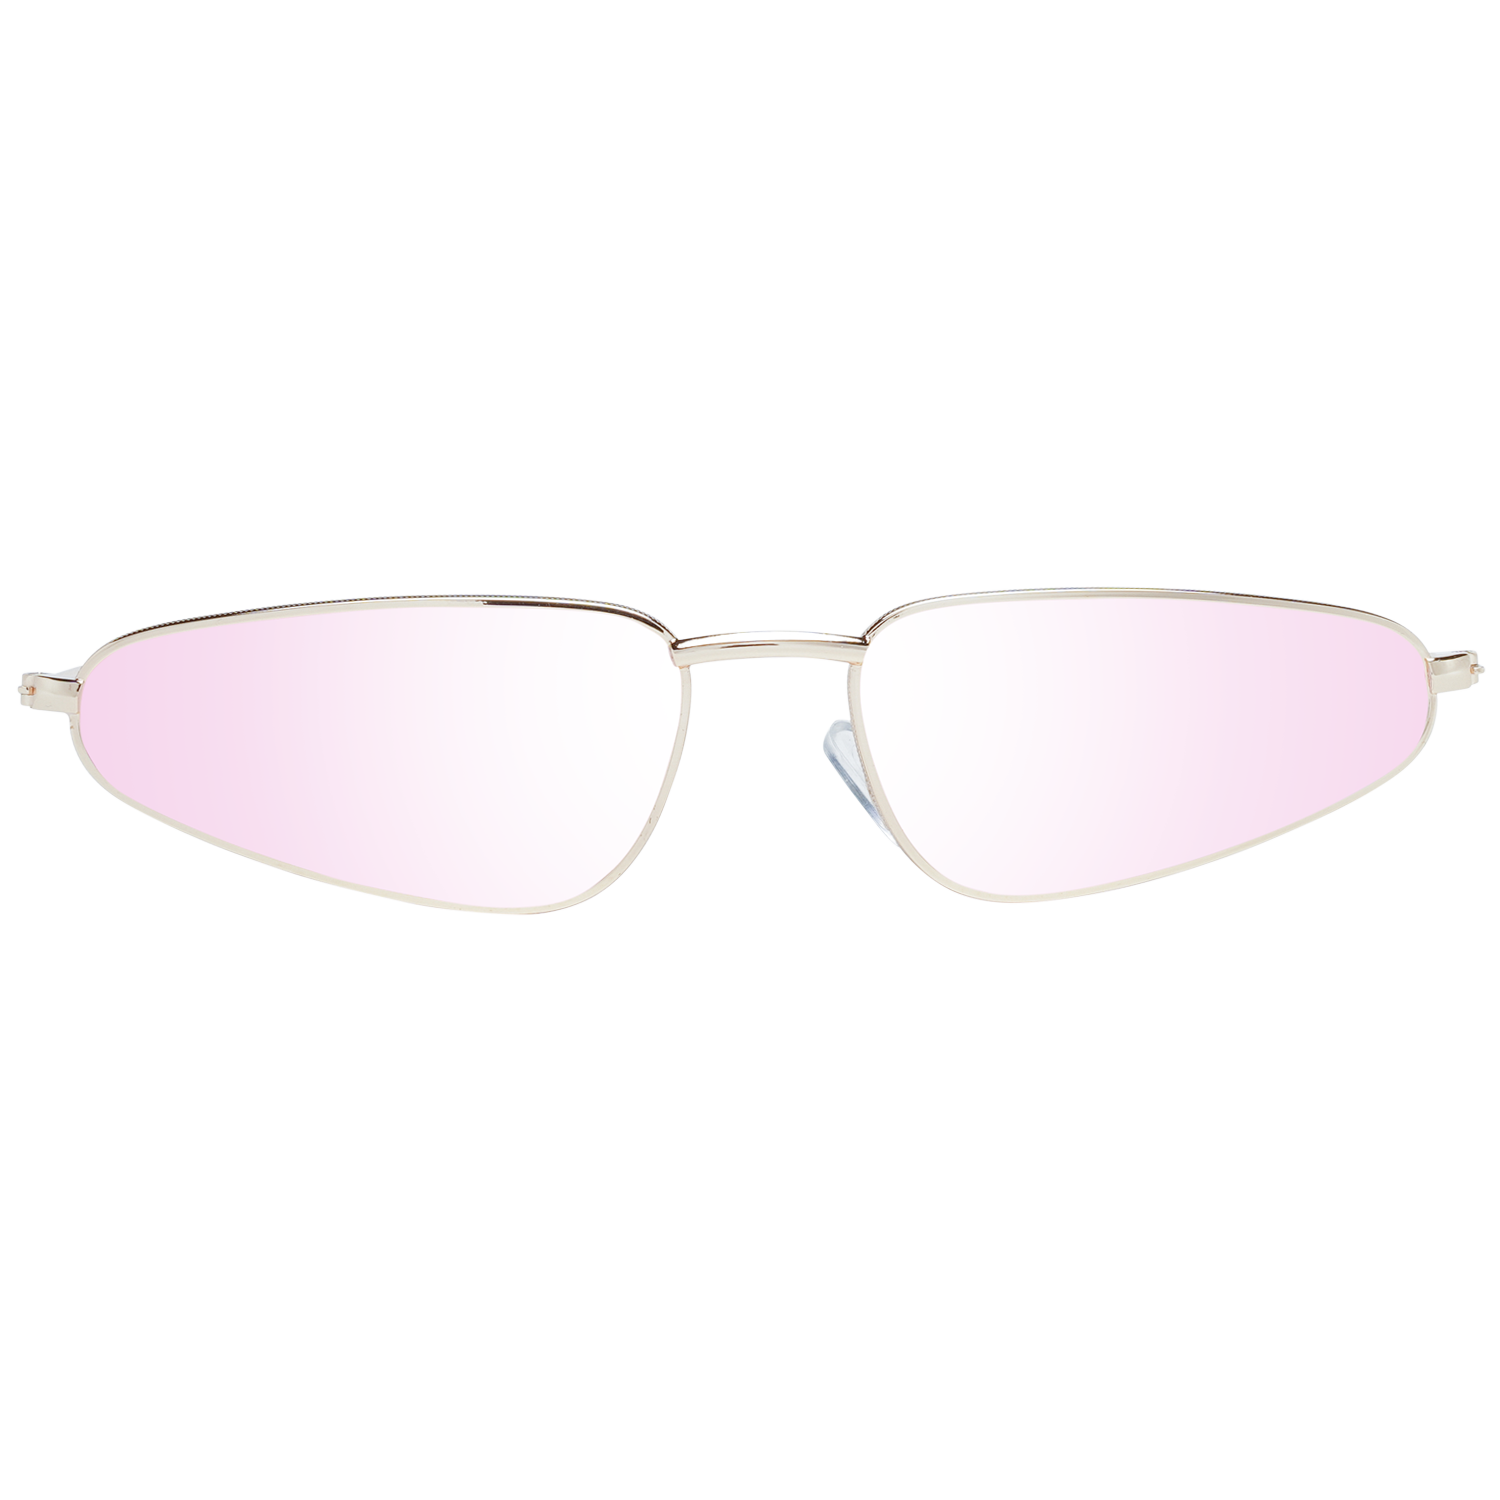 Millner Sunglasses Millner Sunglasses 0021103 Gatwick Eyeglasses Eyewear UK USA Australia 